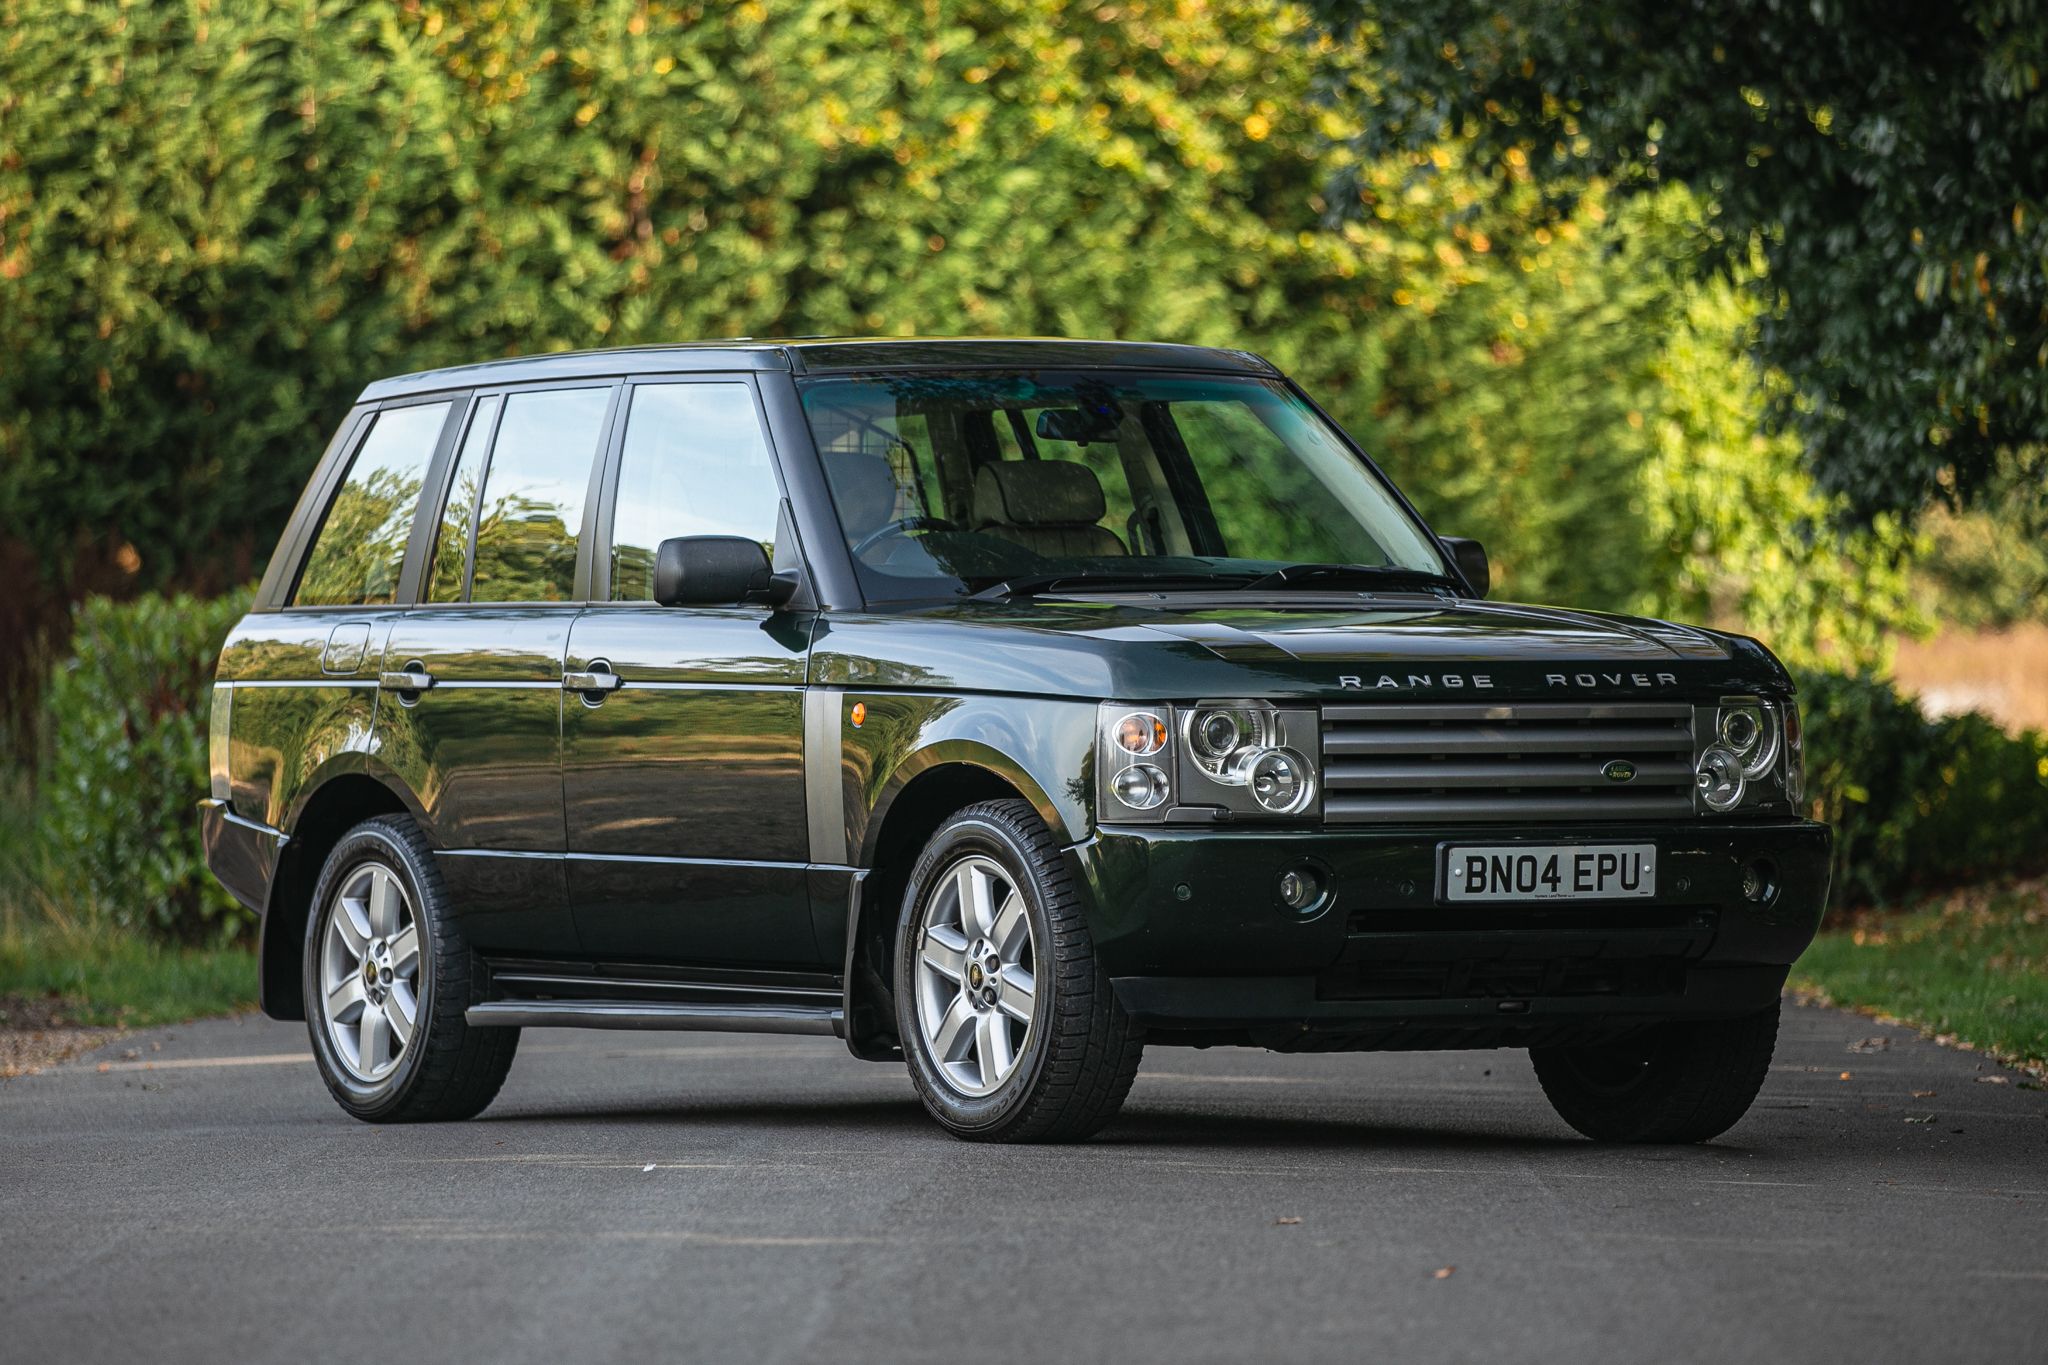 Queen Elizabeth II. fuhr den 2004 Range Rover früher selbst.